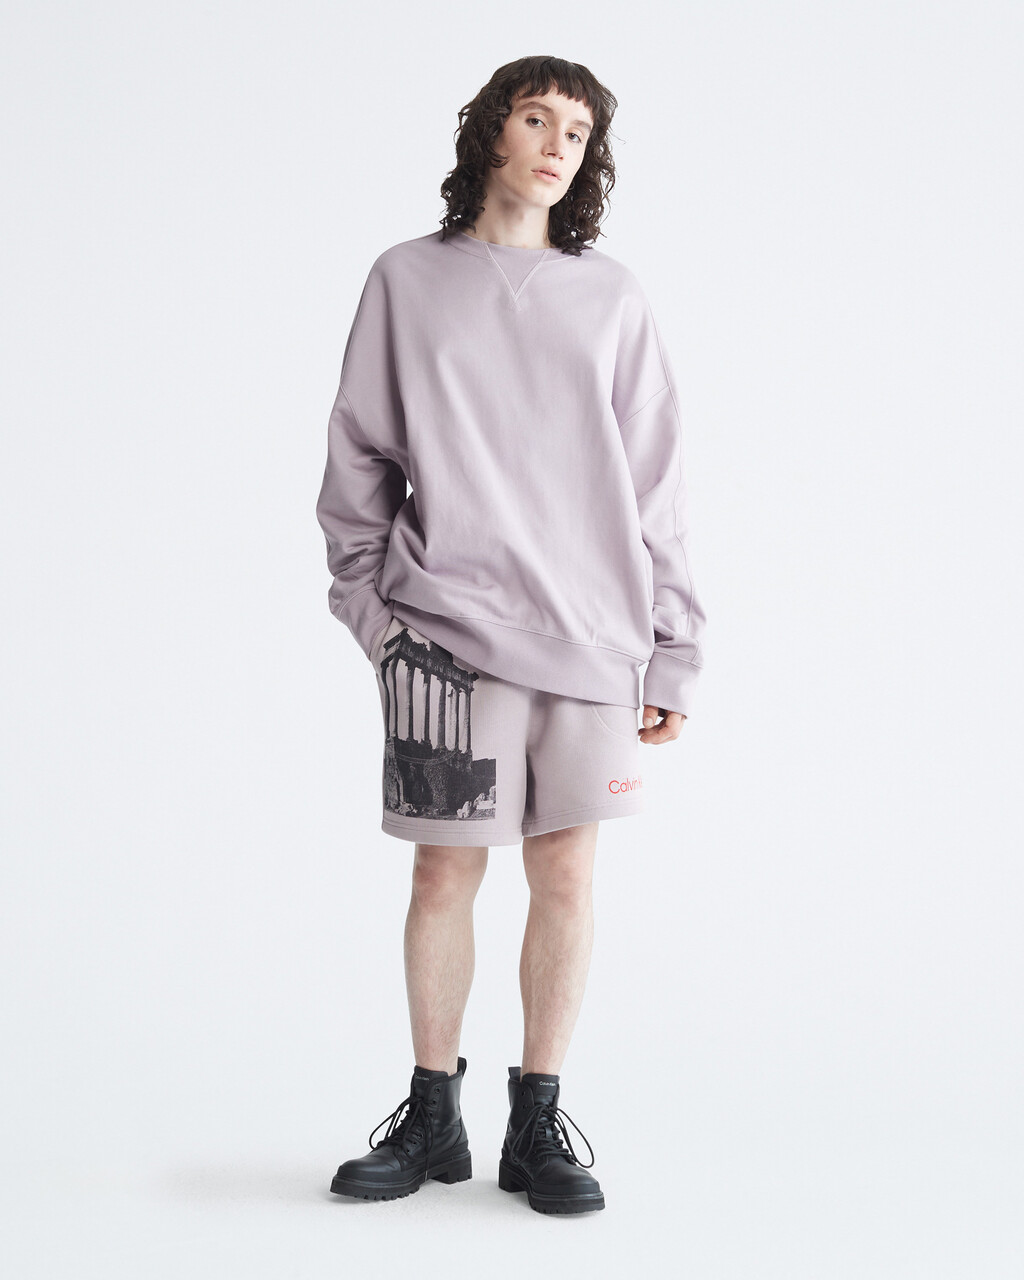 Standards Ruins Graphic Fleece Shorts, Nirvana, hi-res